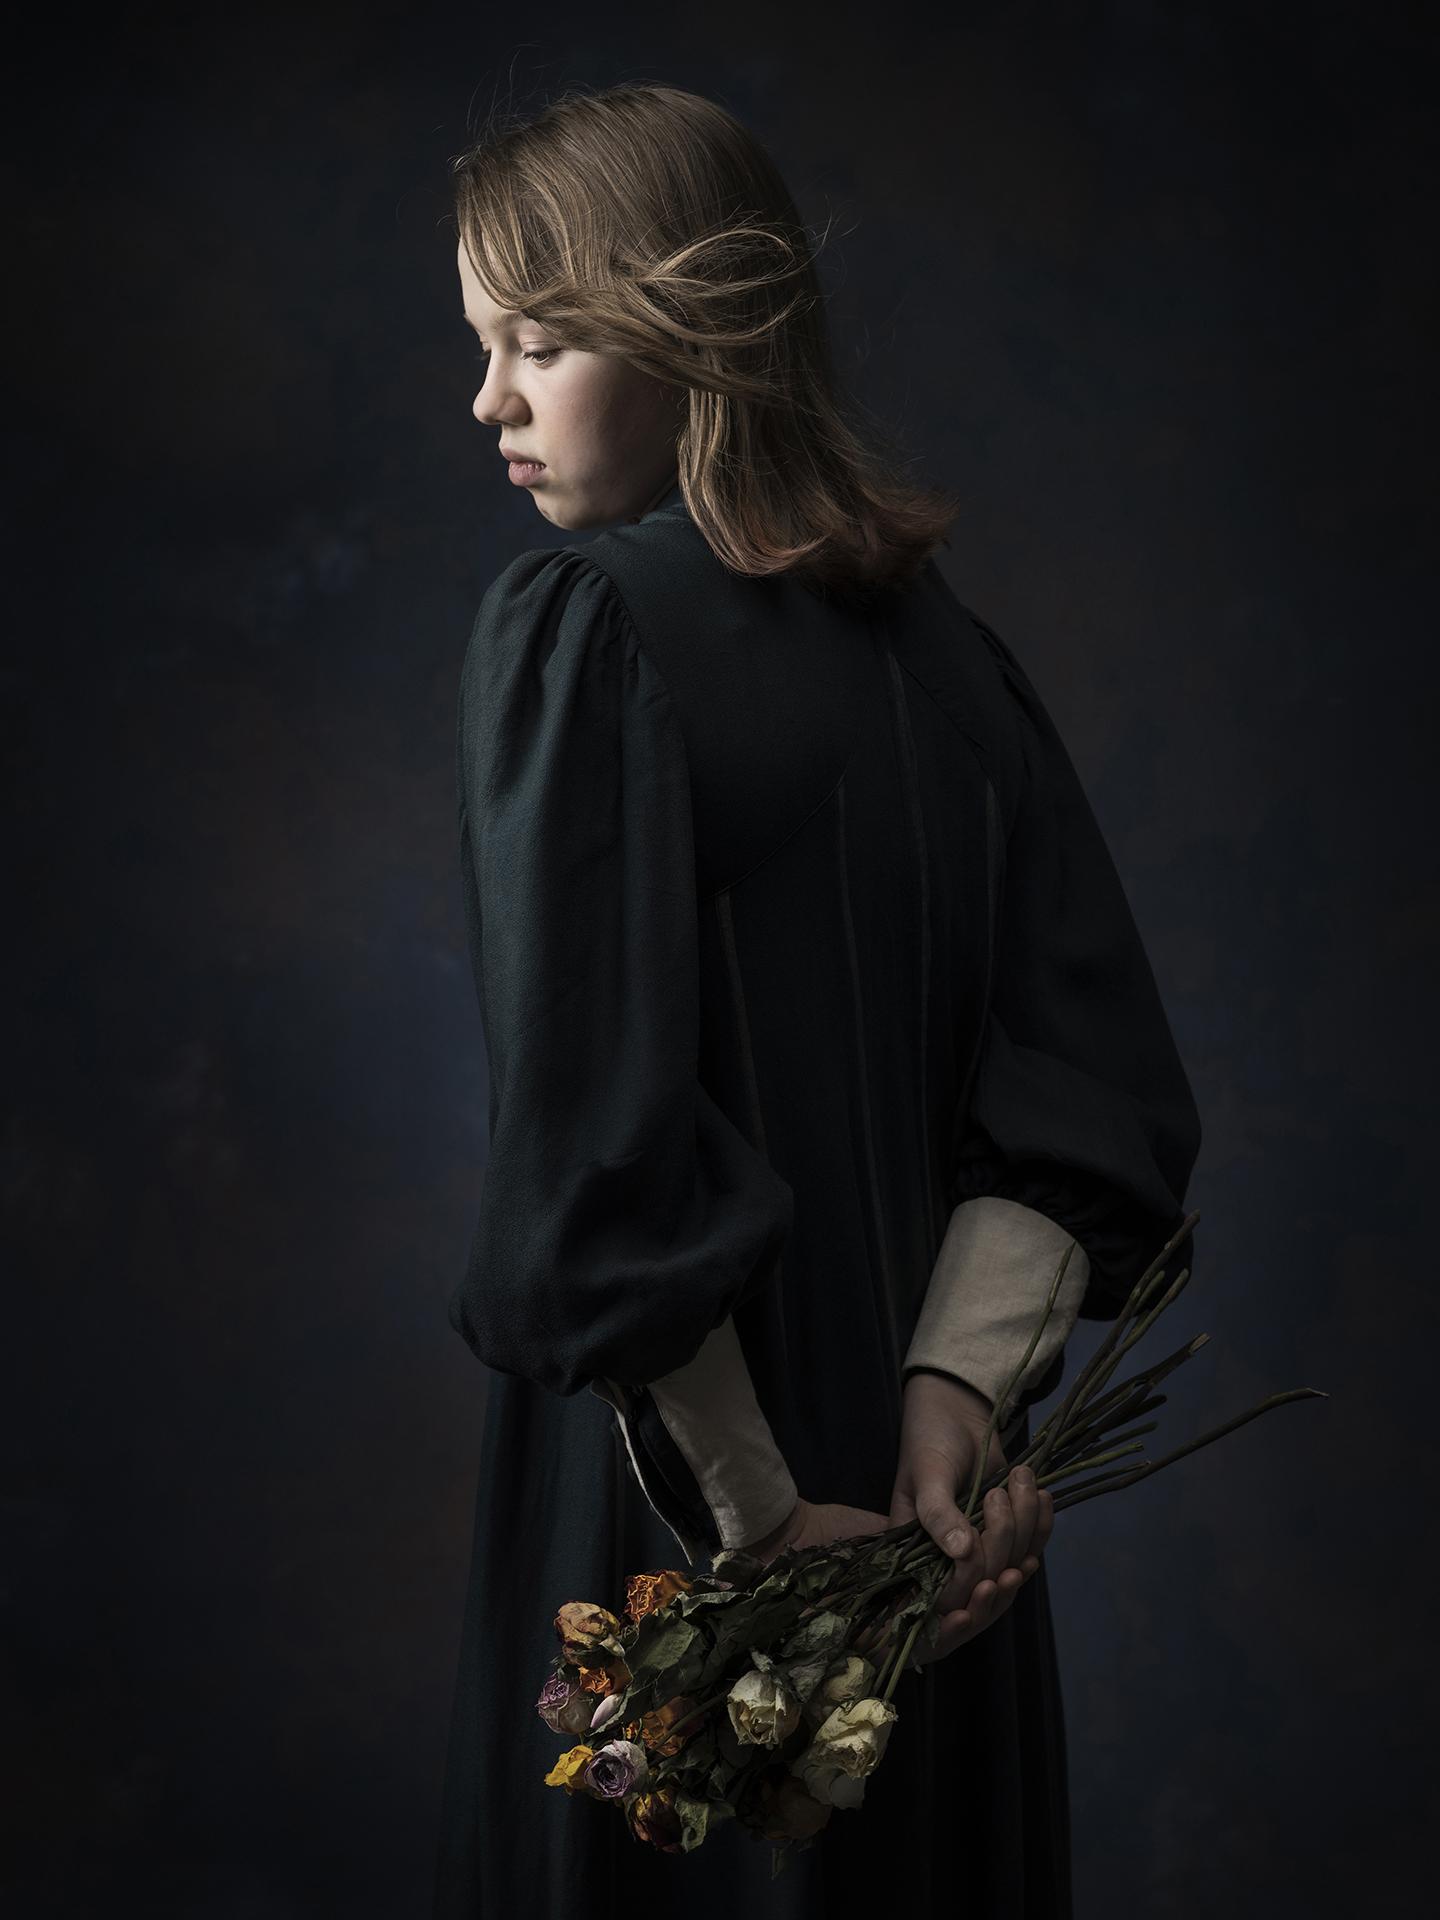 European Photography Awards Winner - Flowergirl